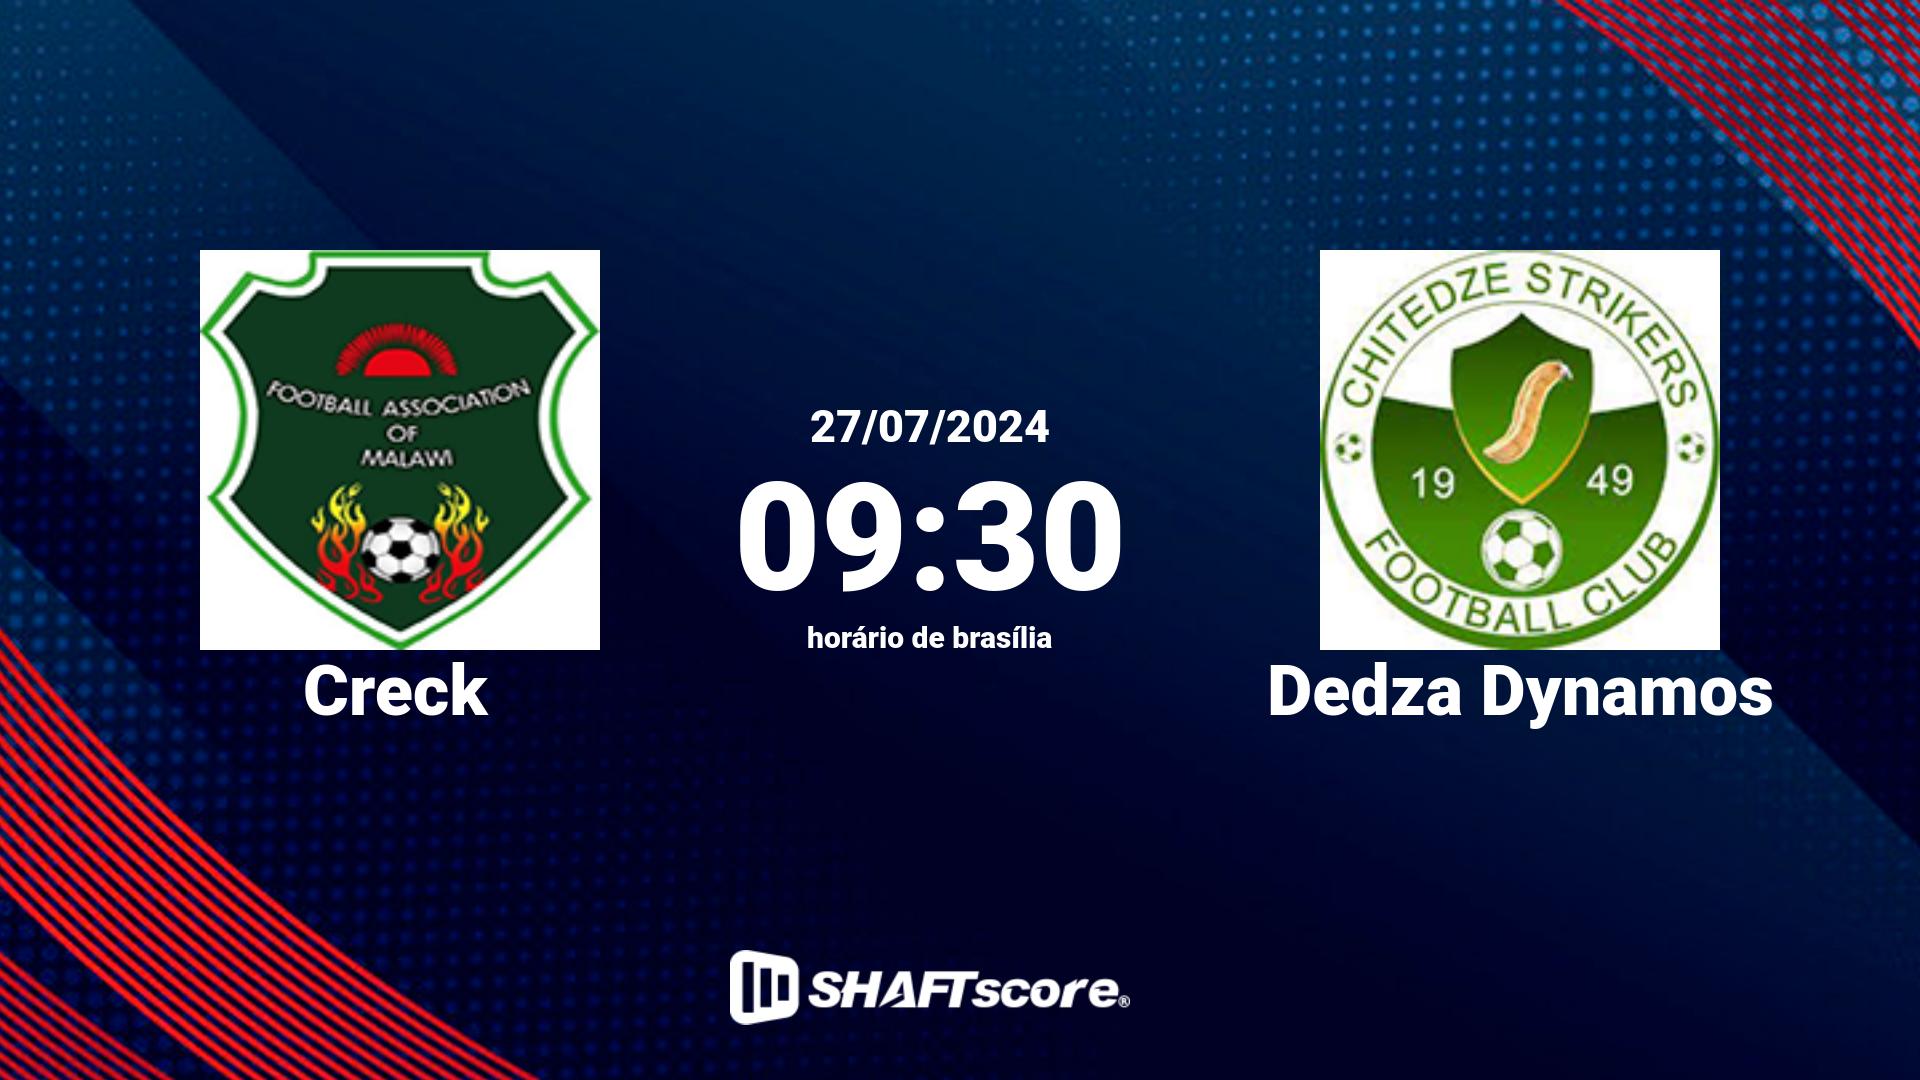 Estatísticas do jogo Creck vs Dedza Dynamos 27.07 09:30